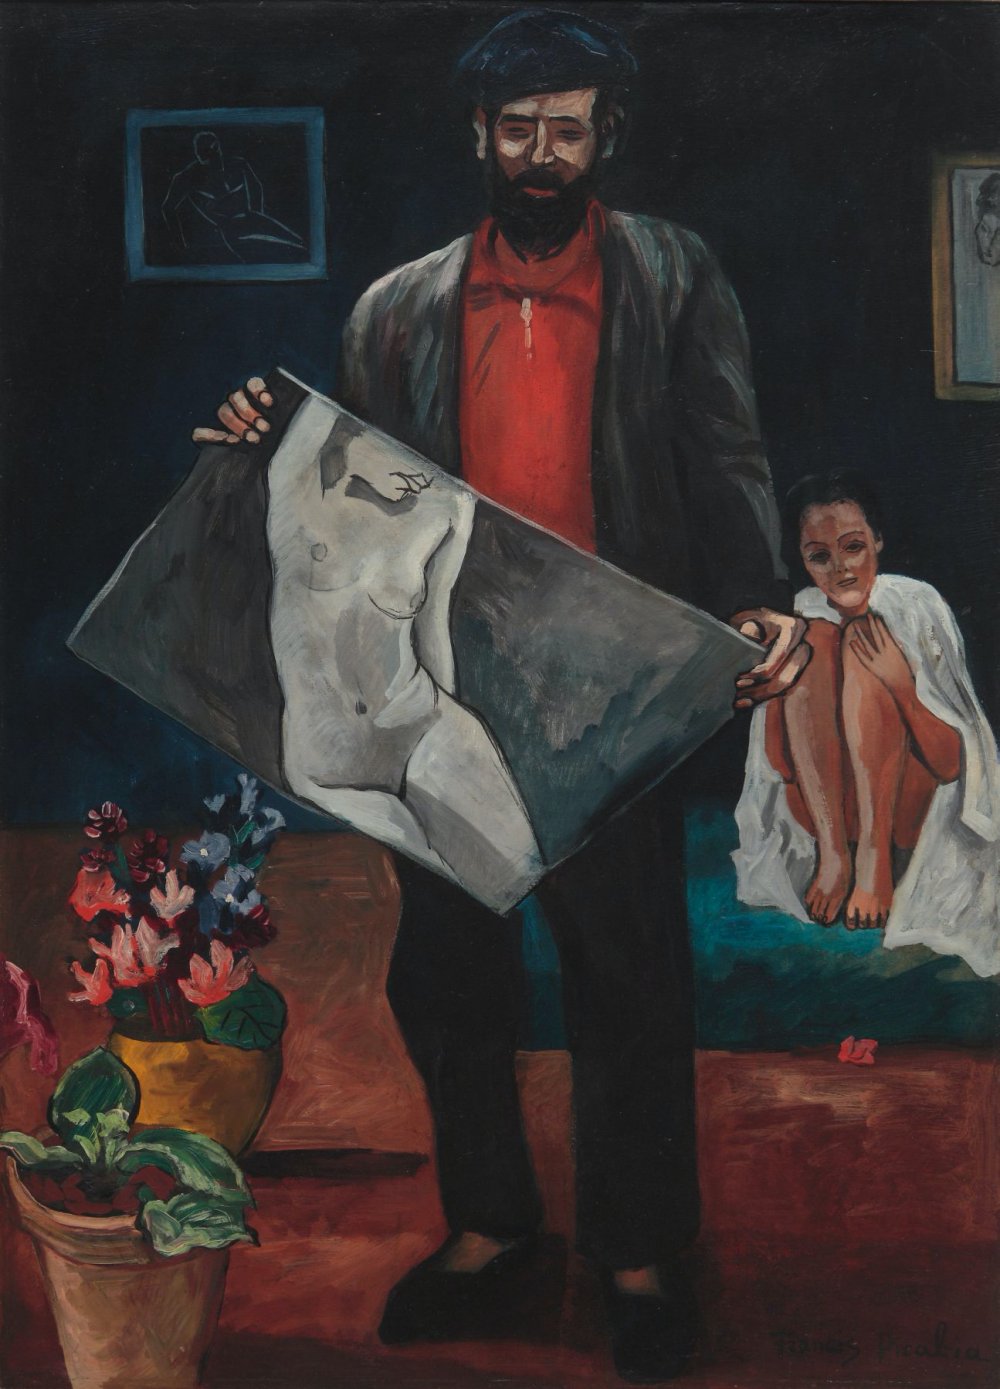 Francis Picabia, Montparnasse, ca. 1941-42